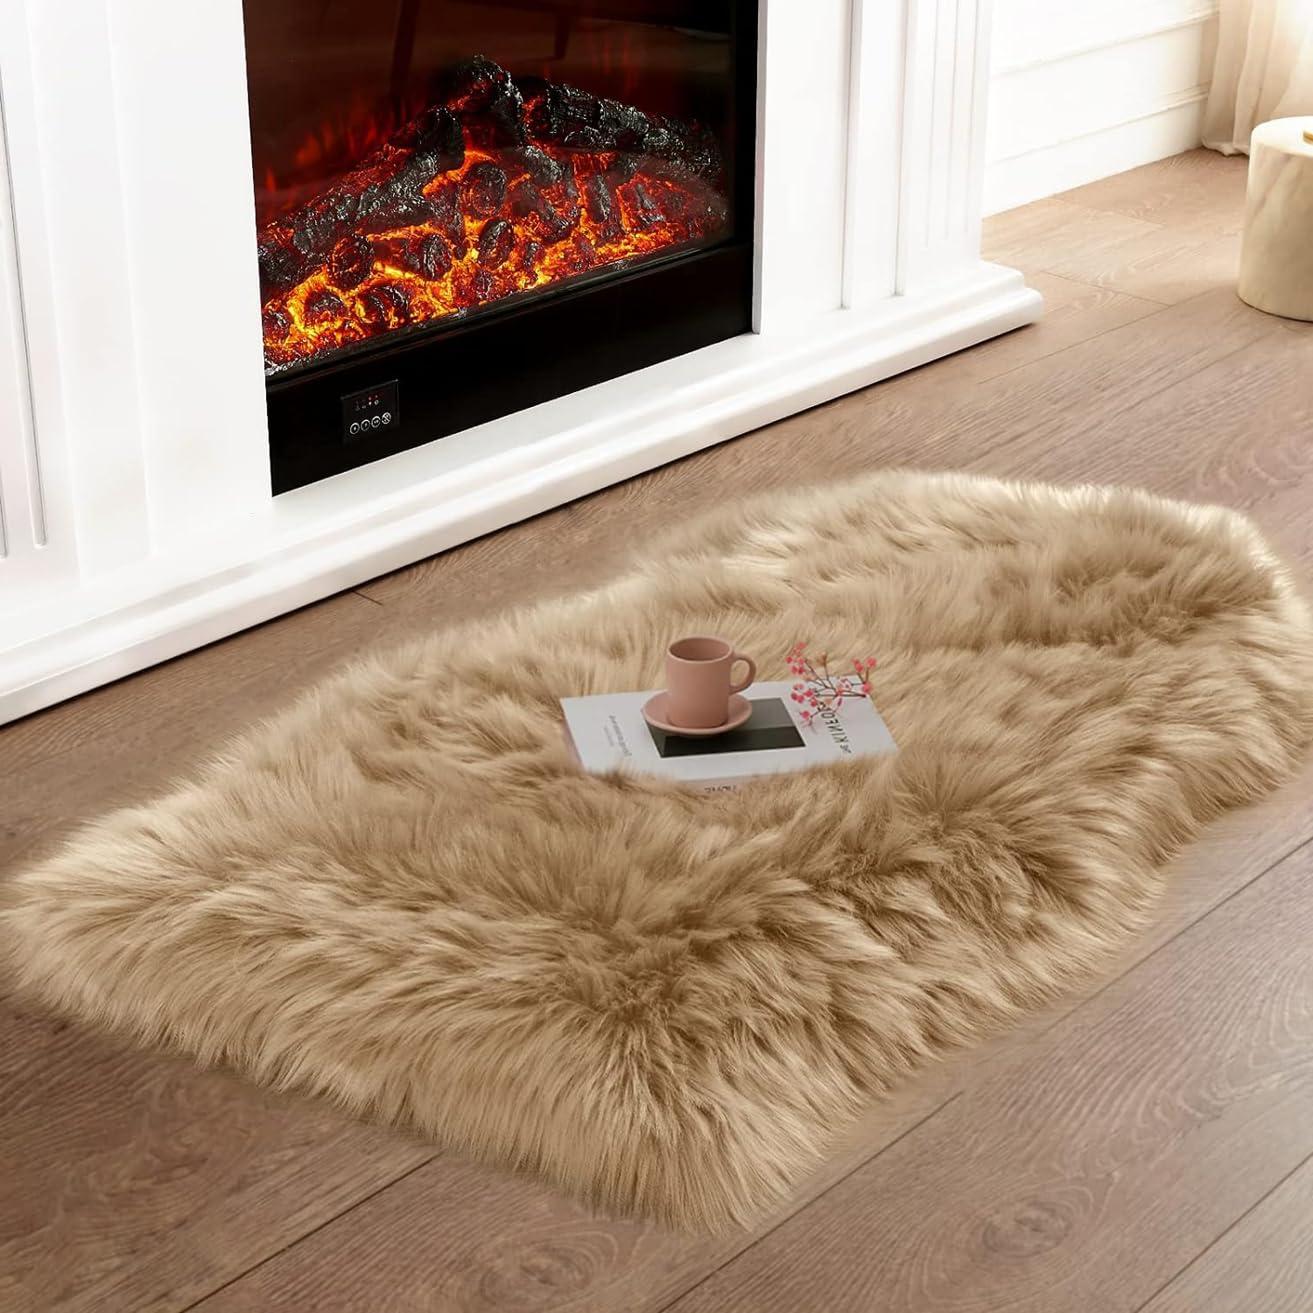 JXLOULAN Faux Rabbit Fur Area Rug- Soft Fluffy Rugs Anti-Skid Carpet for Living Room Bedroom Sofa Nursery Rugs (60 x 160 cm, White)